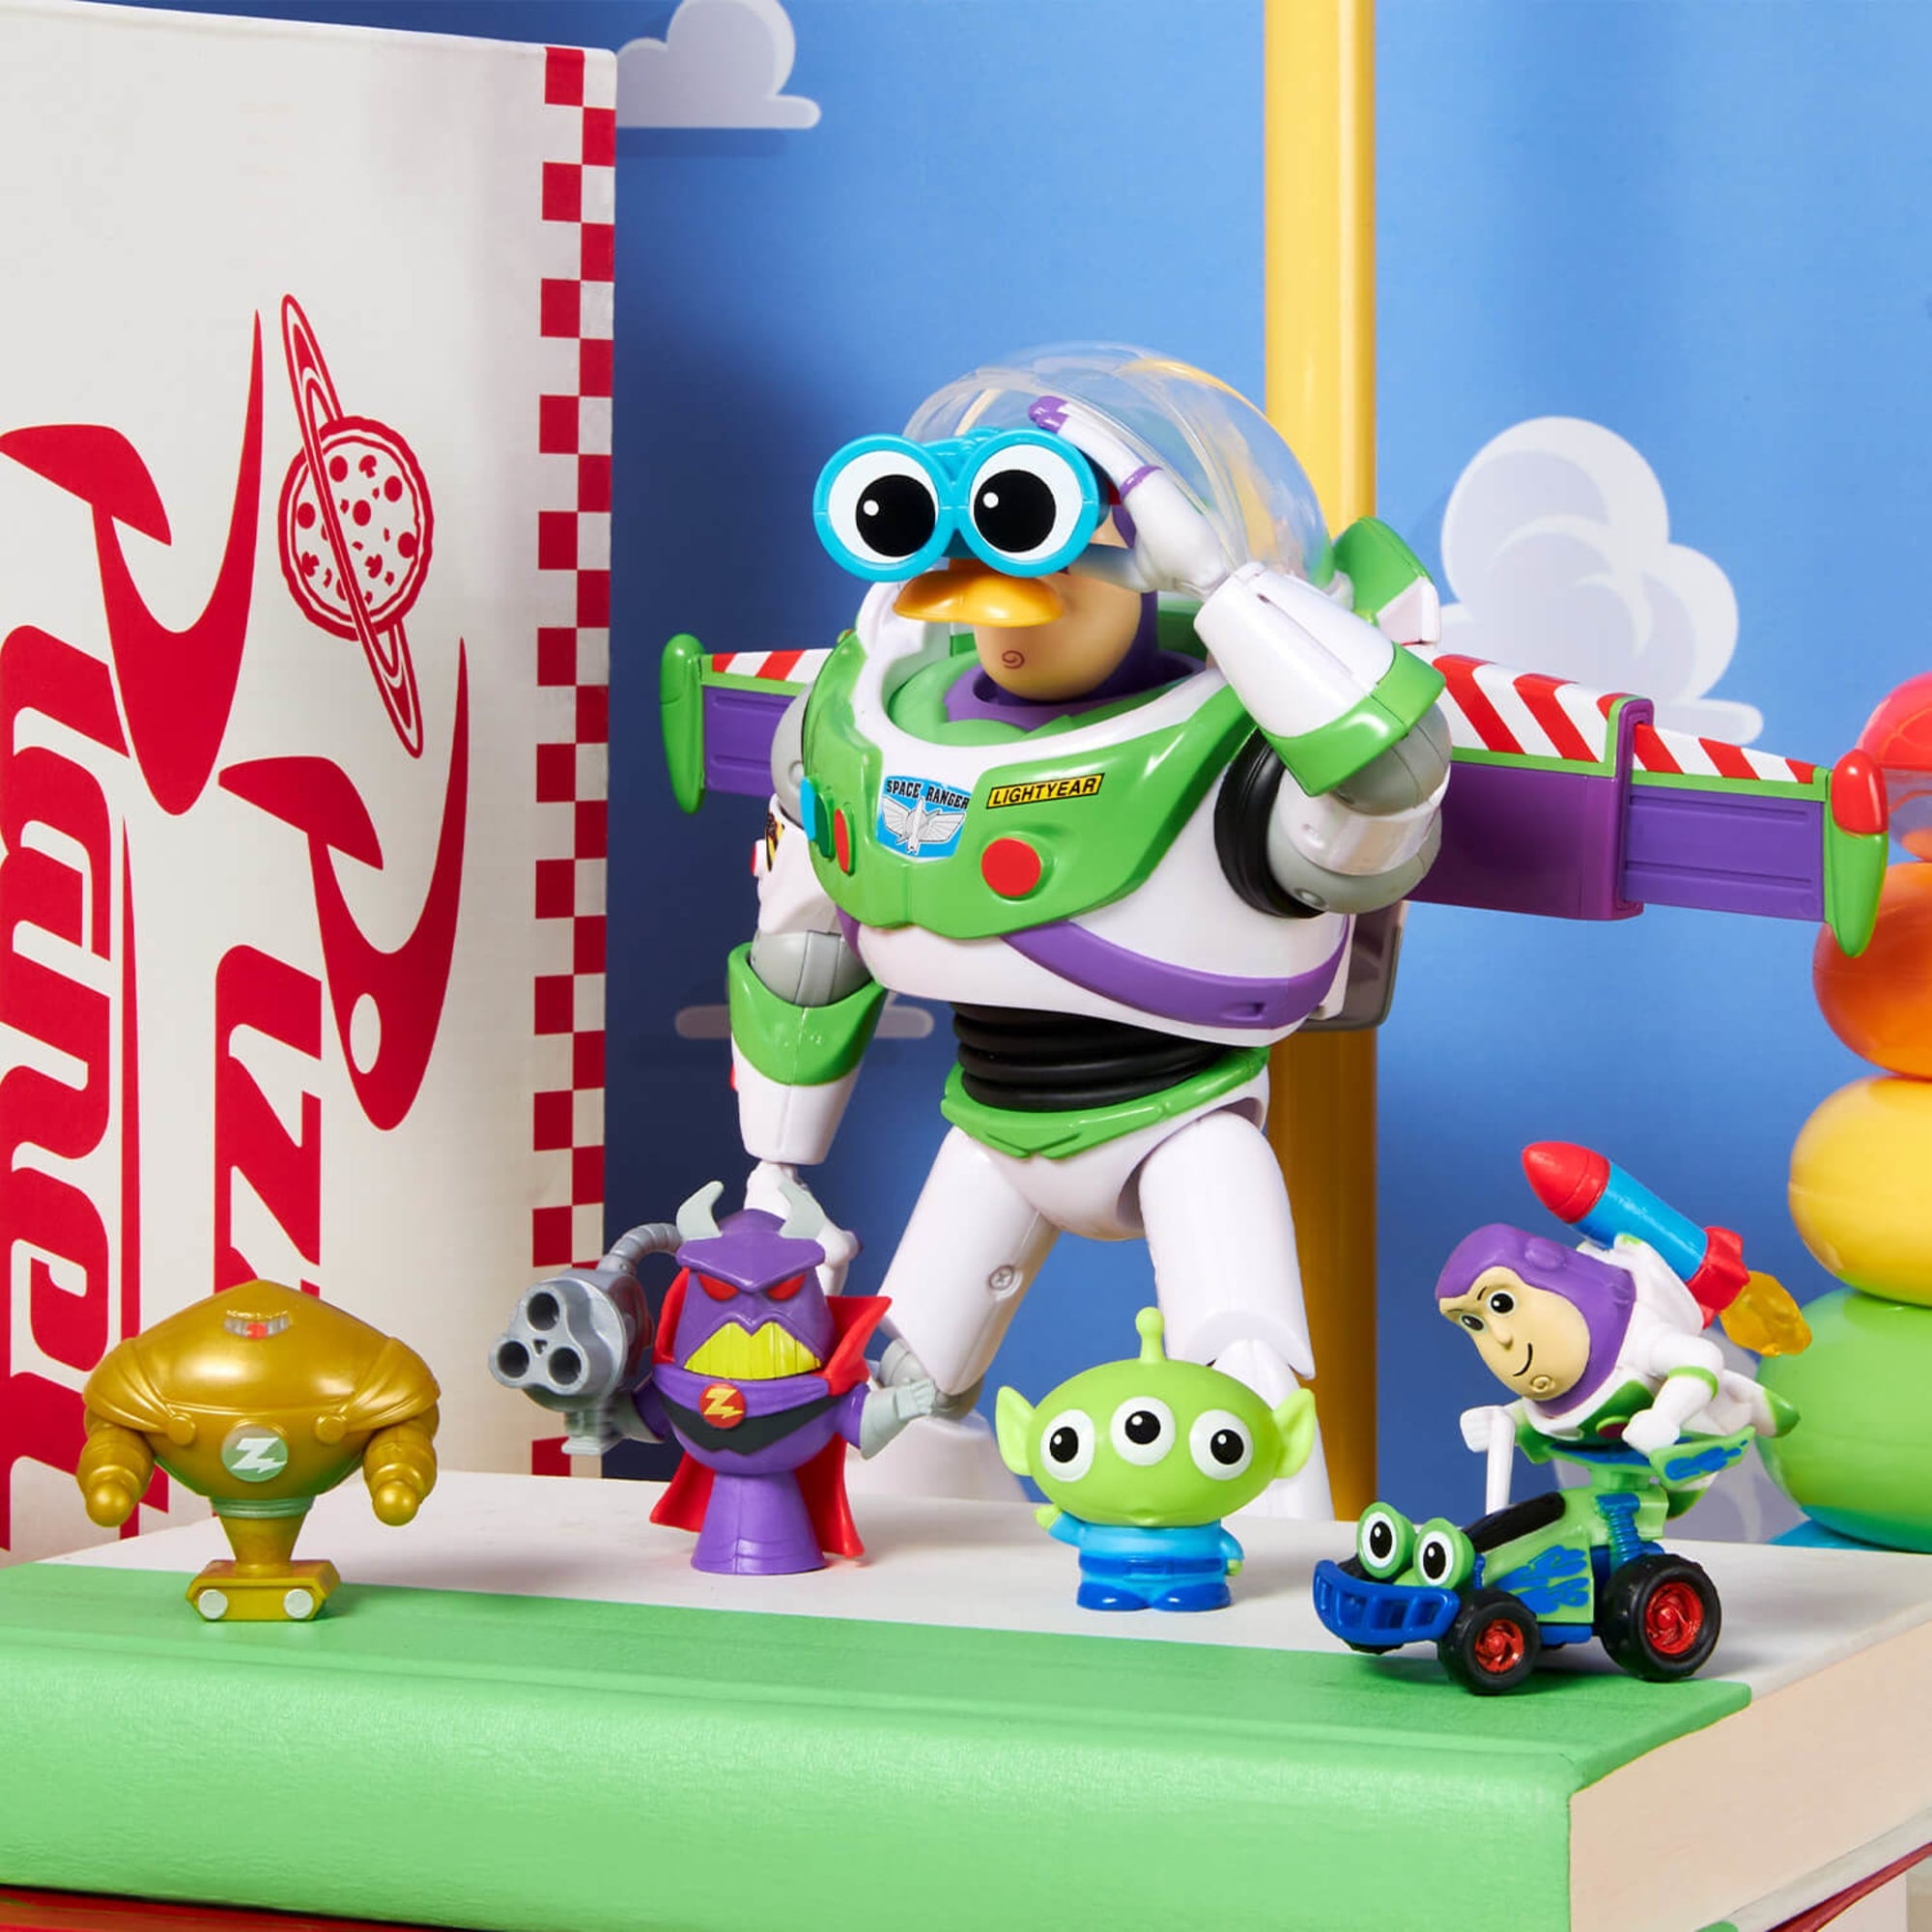 Disney Pixar's Up, Merchandise, Gifts & Toys